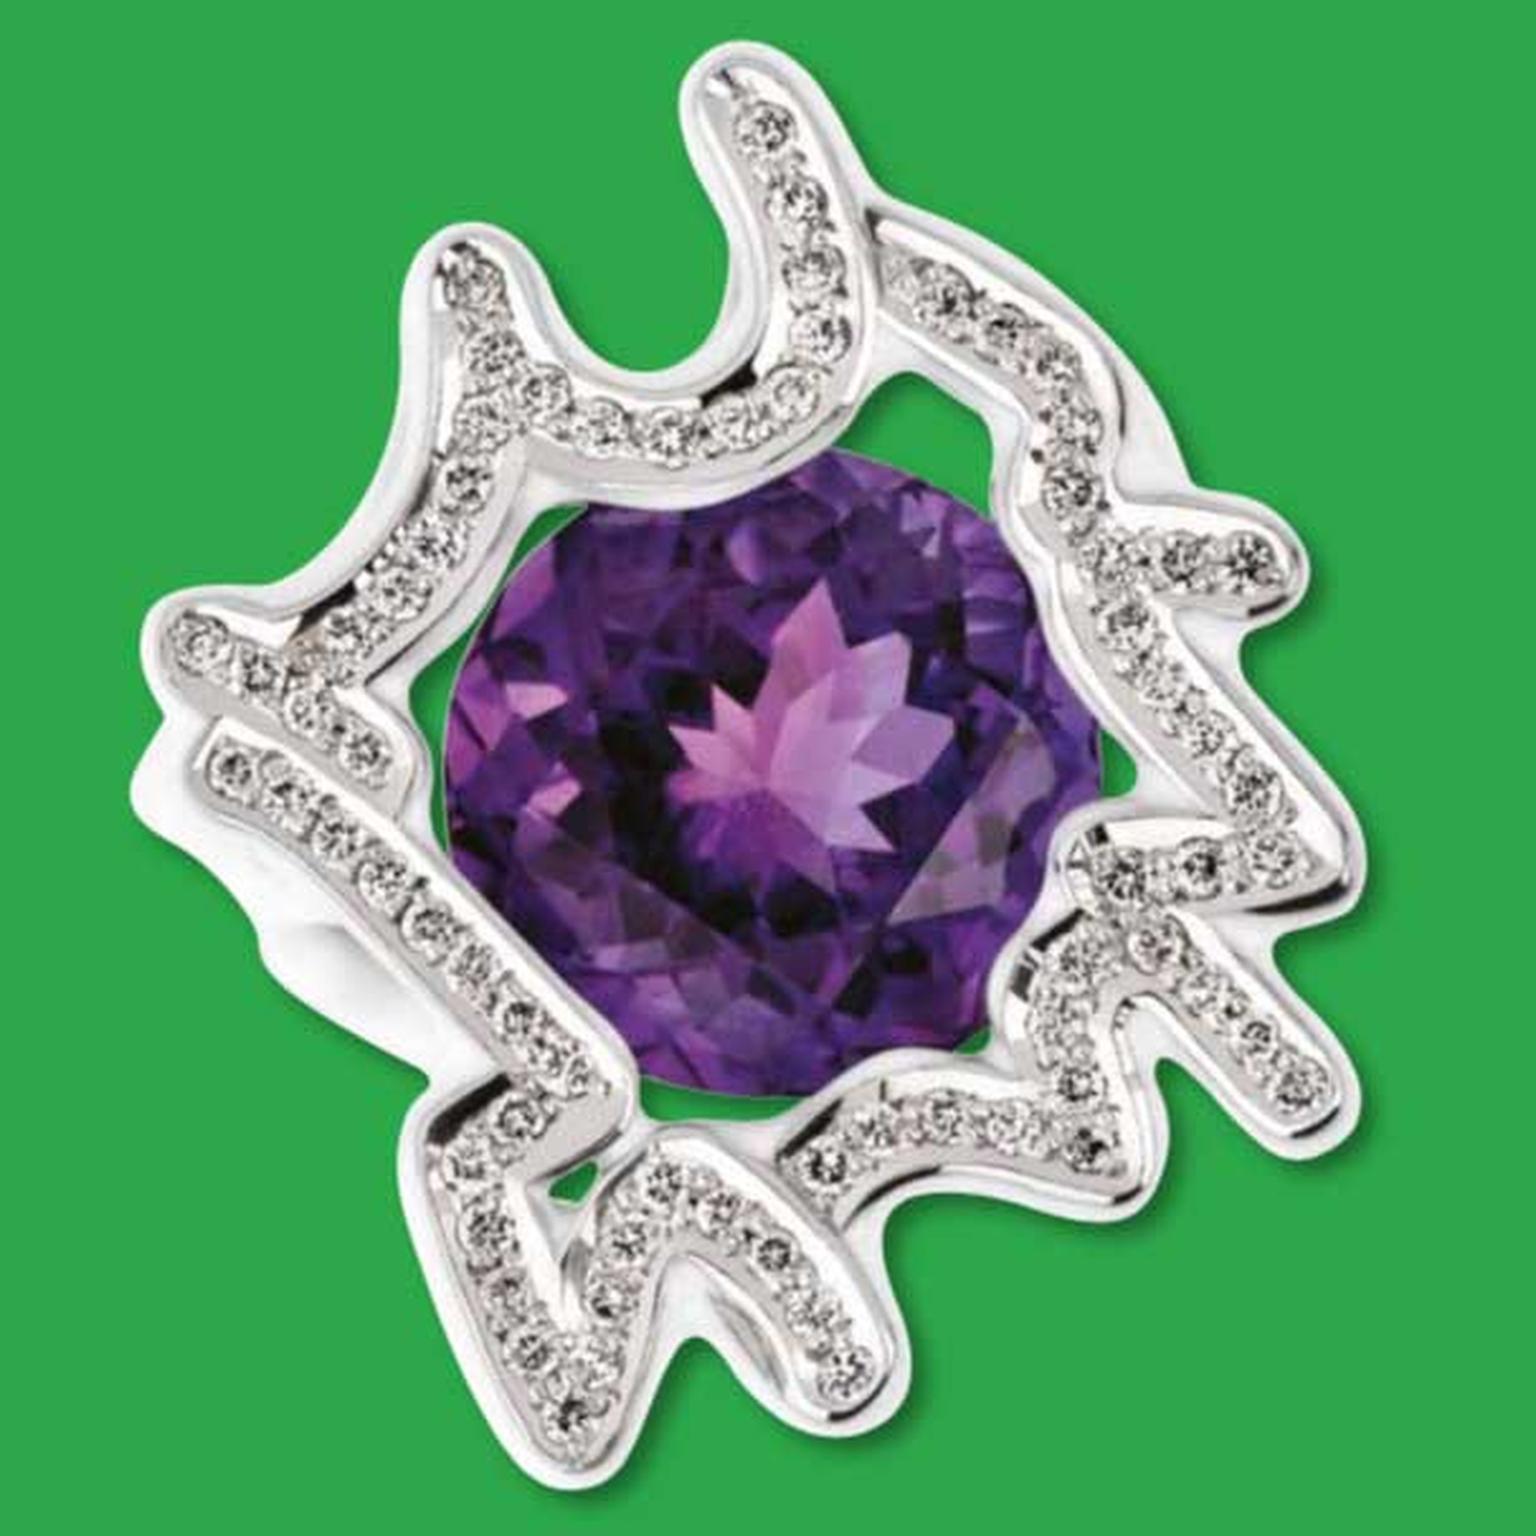 Solange Azagury-Partridge Scribbles white and purple ring